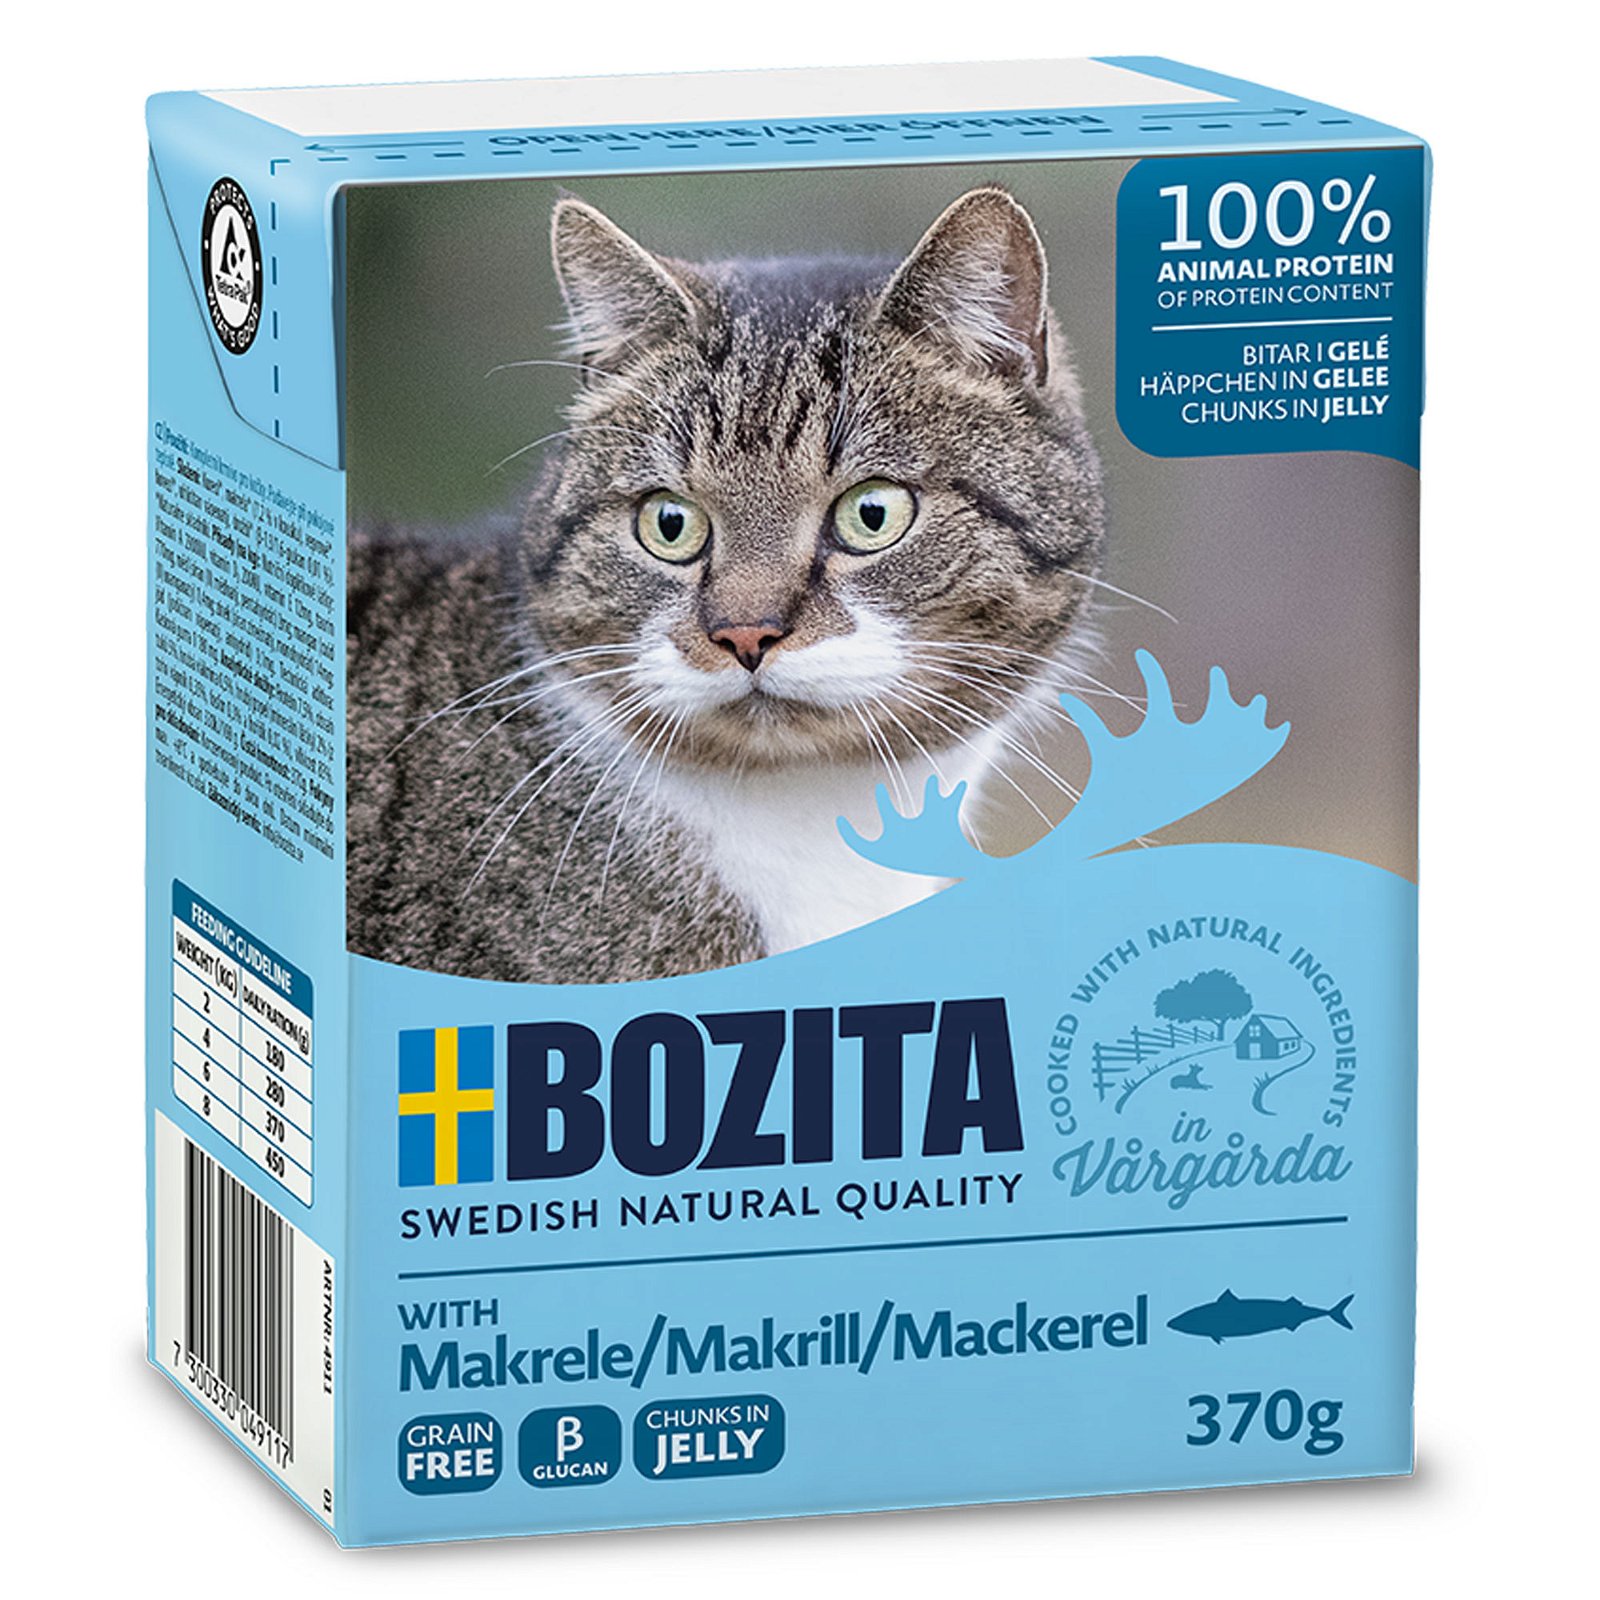 Bozita Katzenfutter, Makrele, 370 g